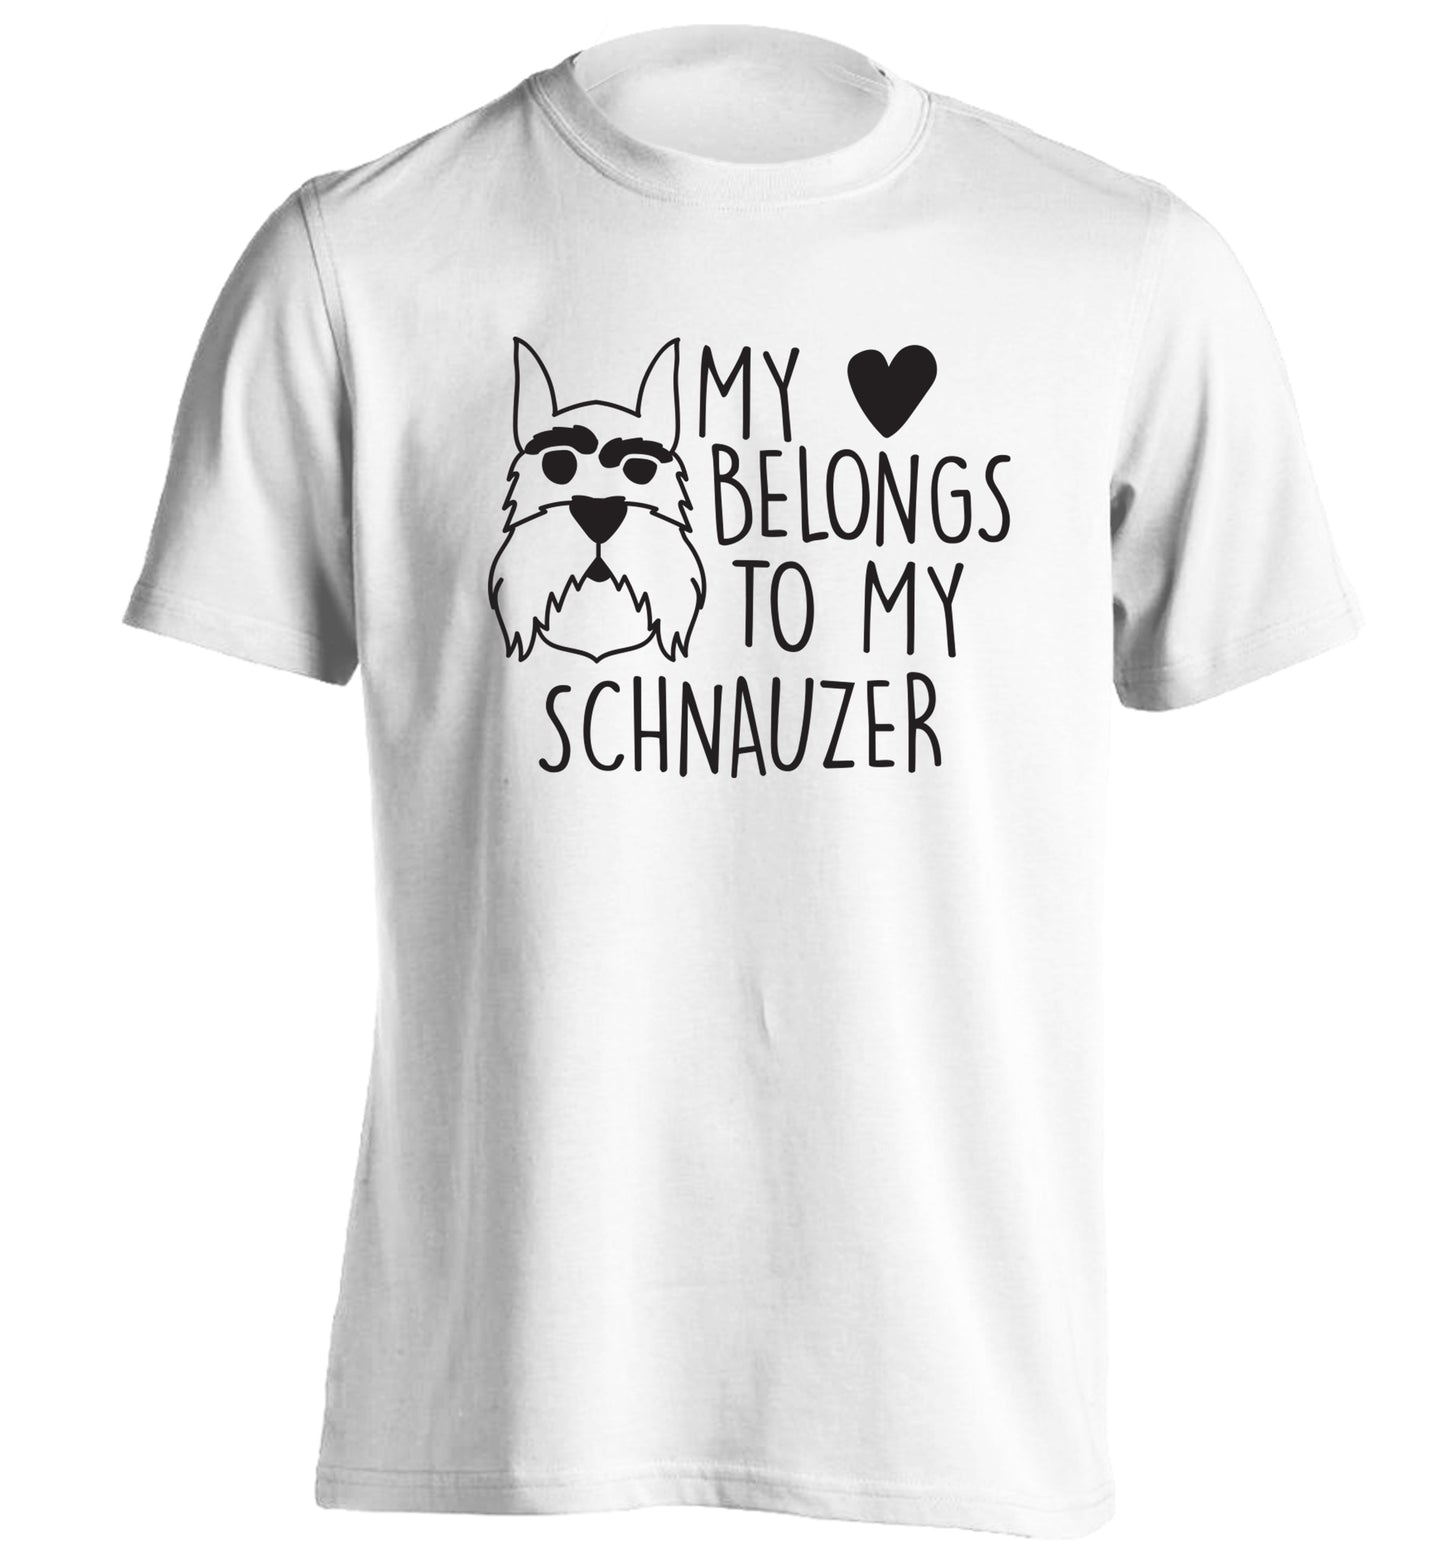 My heart belongs to my schnauzer adults unisex white Tshirt 2XL